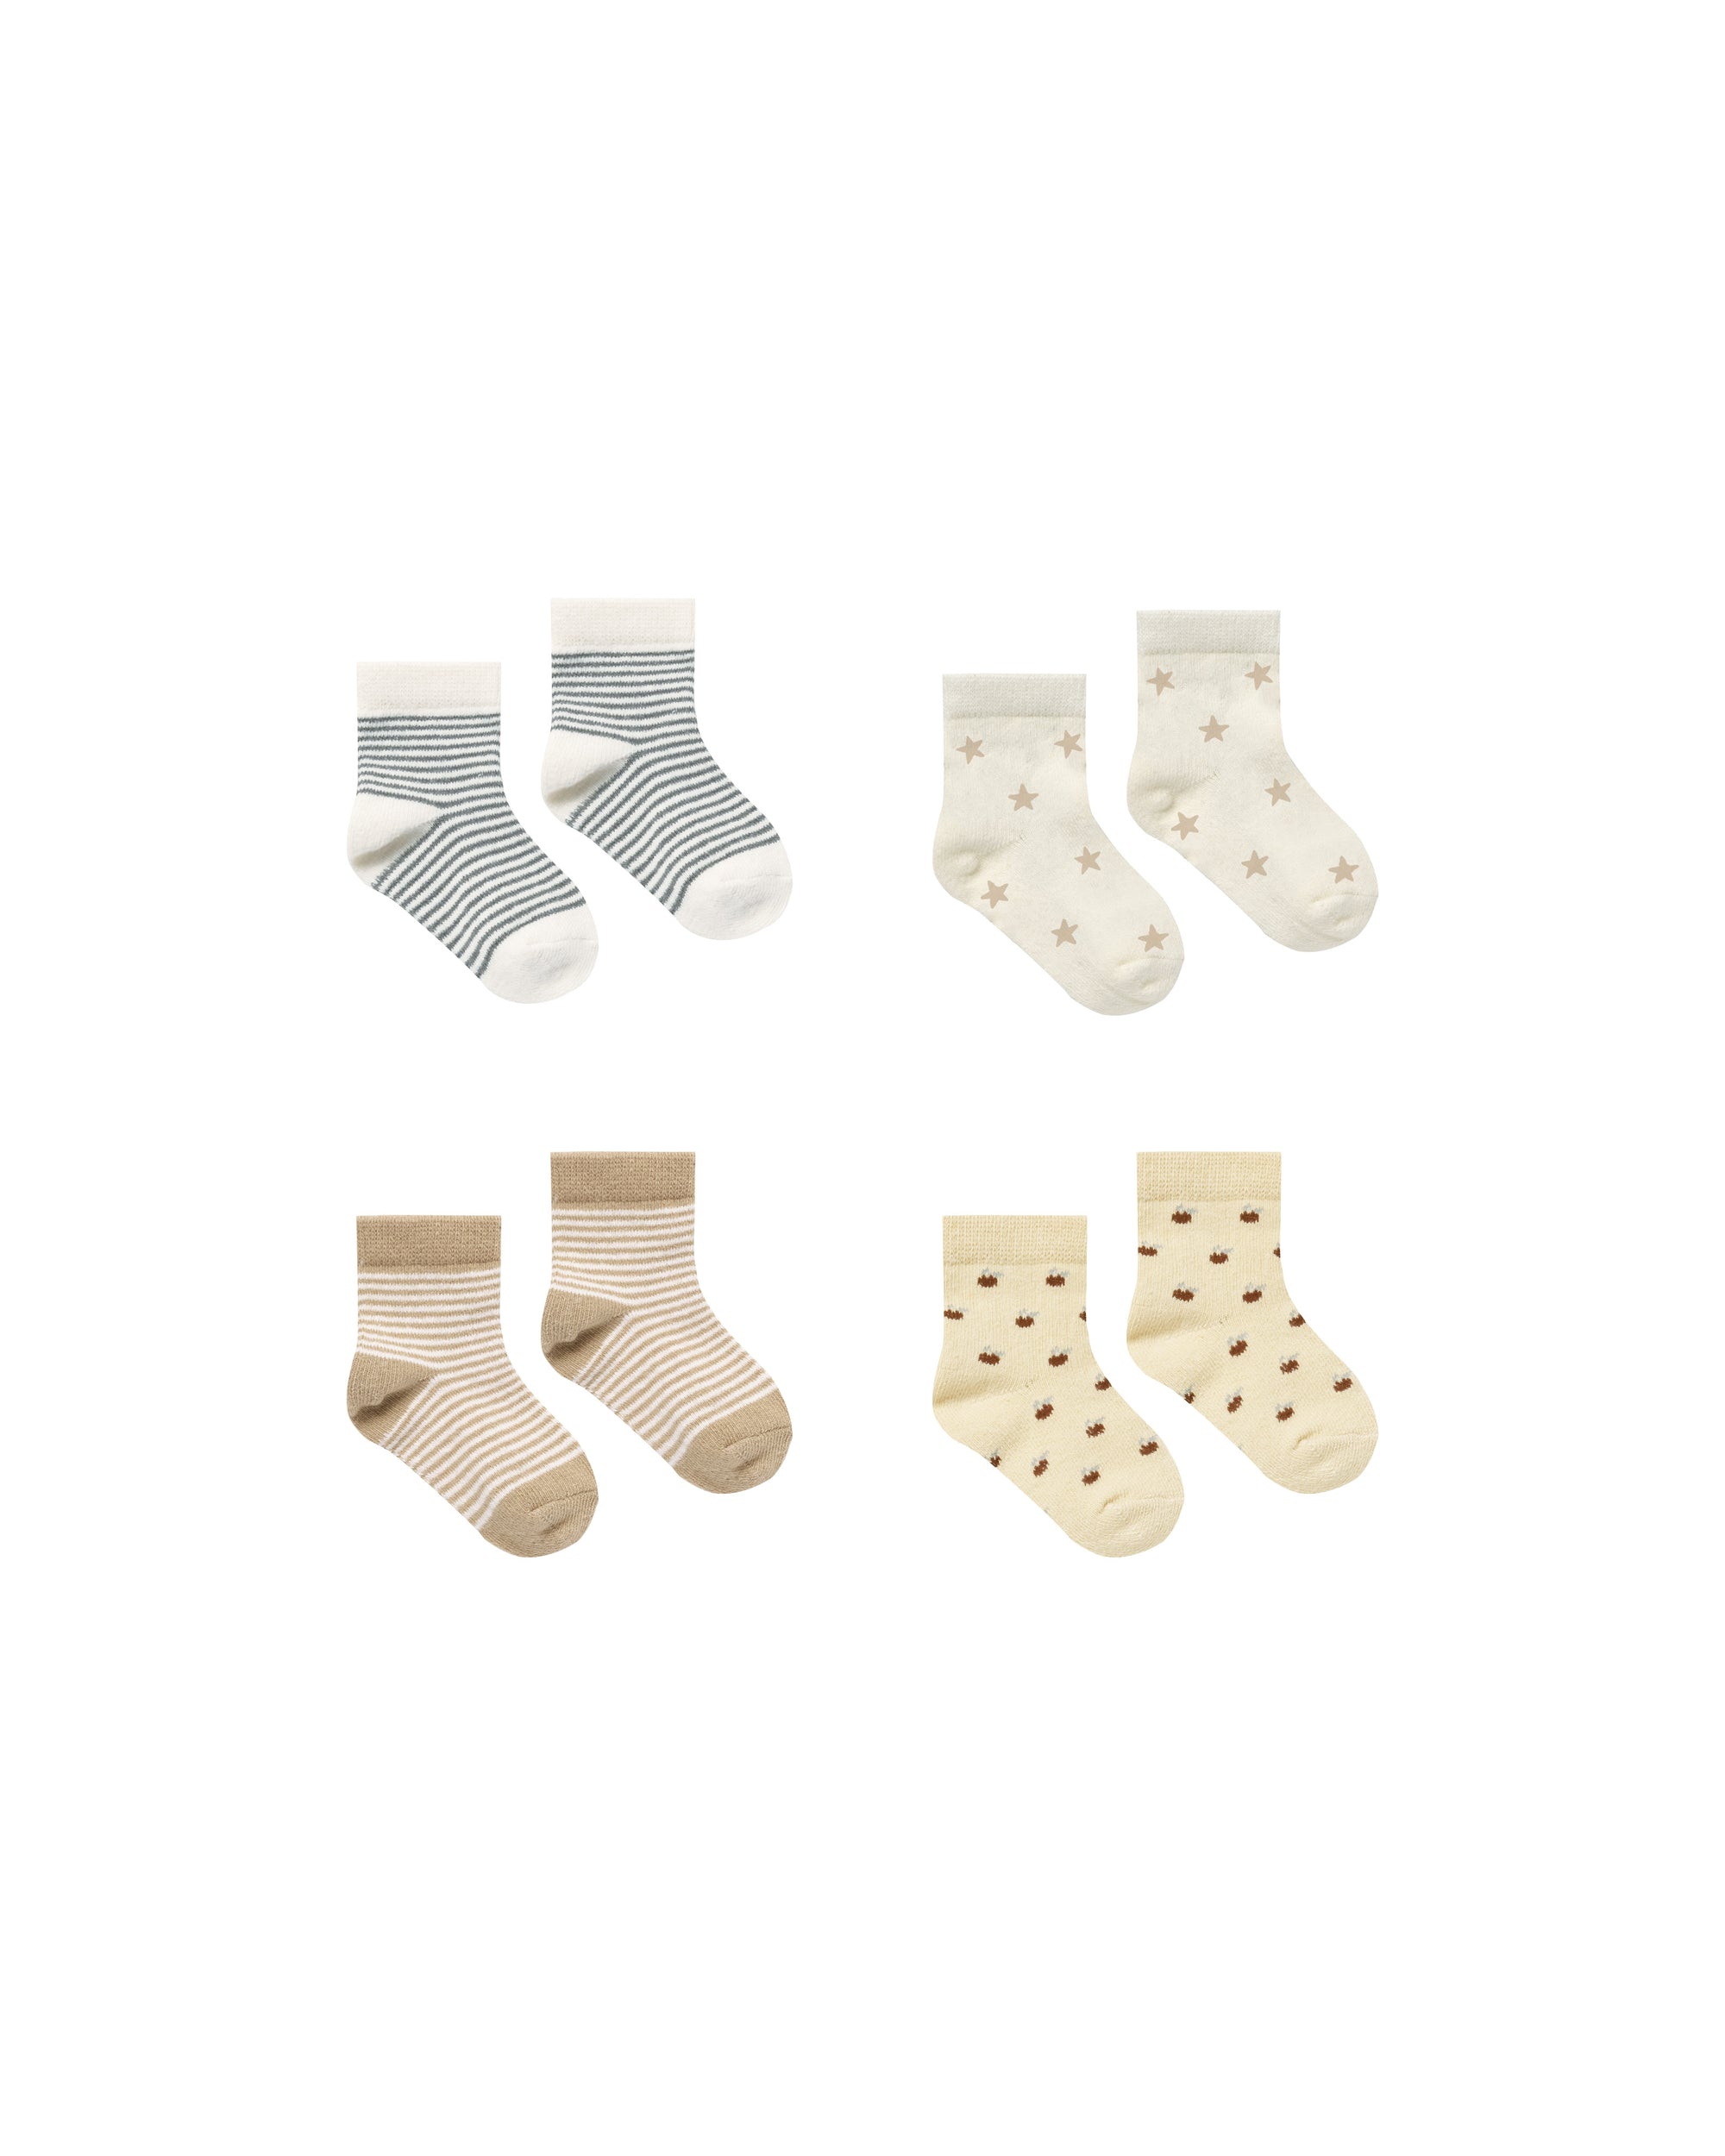 Quincy Mae | Printed Sock Set || Latte Micro Stripe, Stars, Stripe, Apples